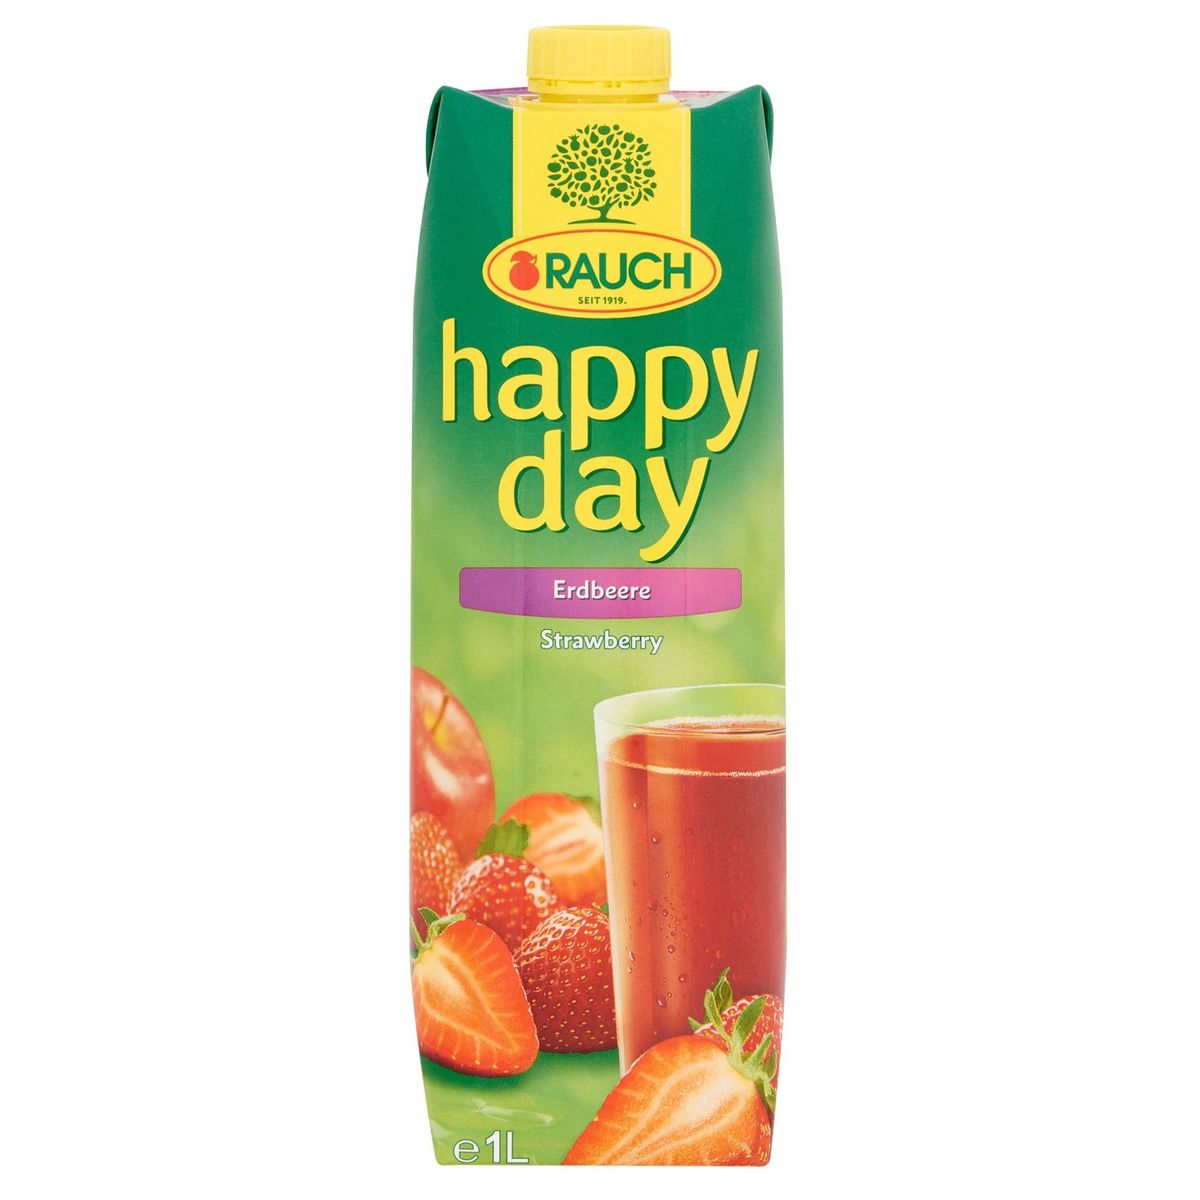 Rauch happy day Strawberry 1 L